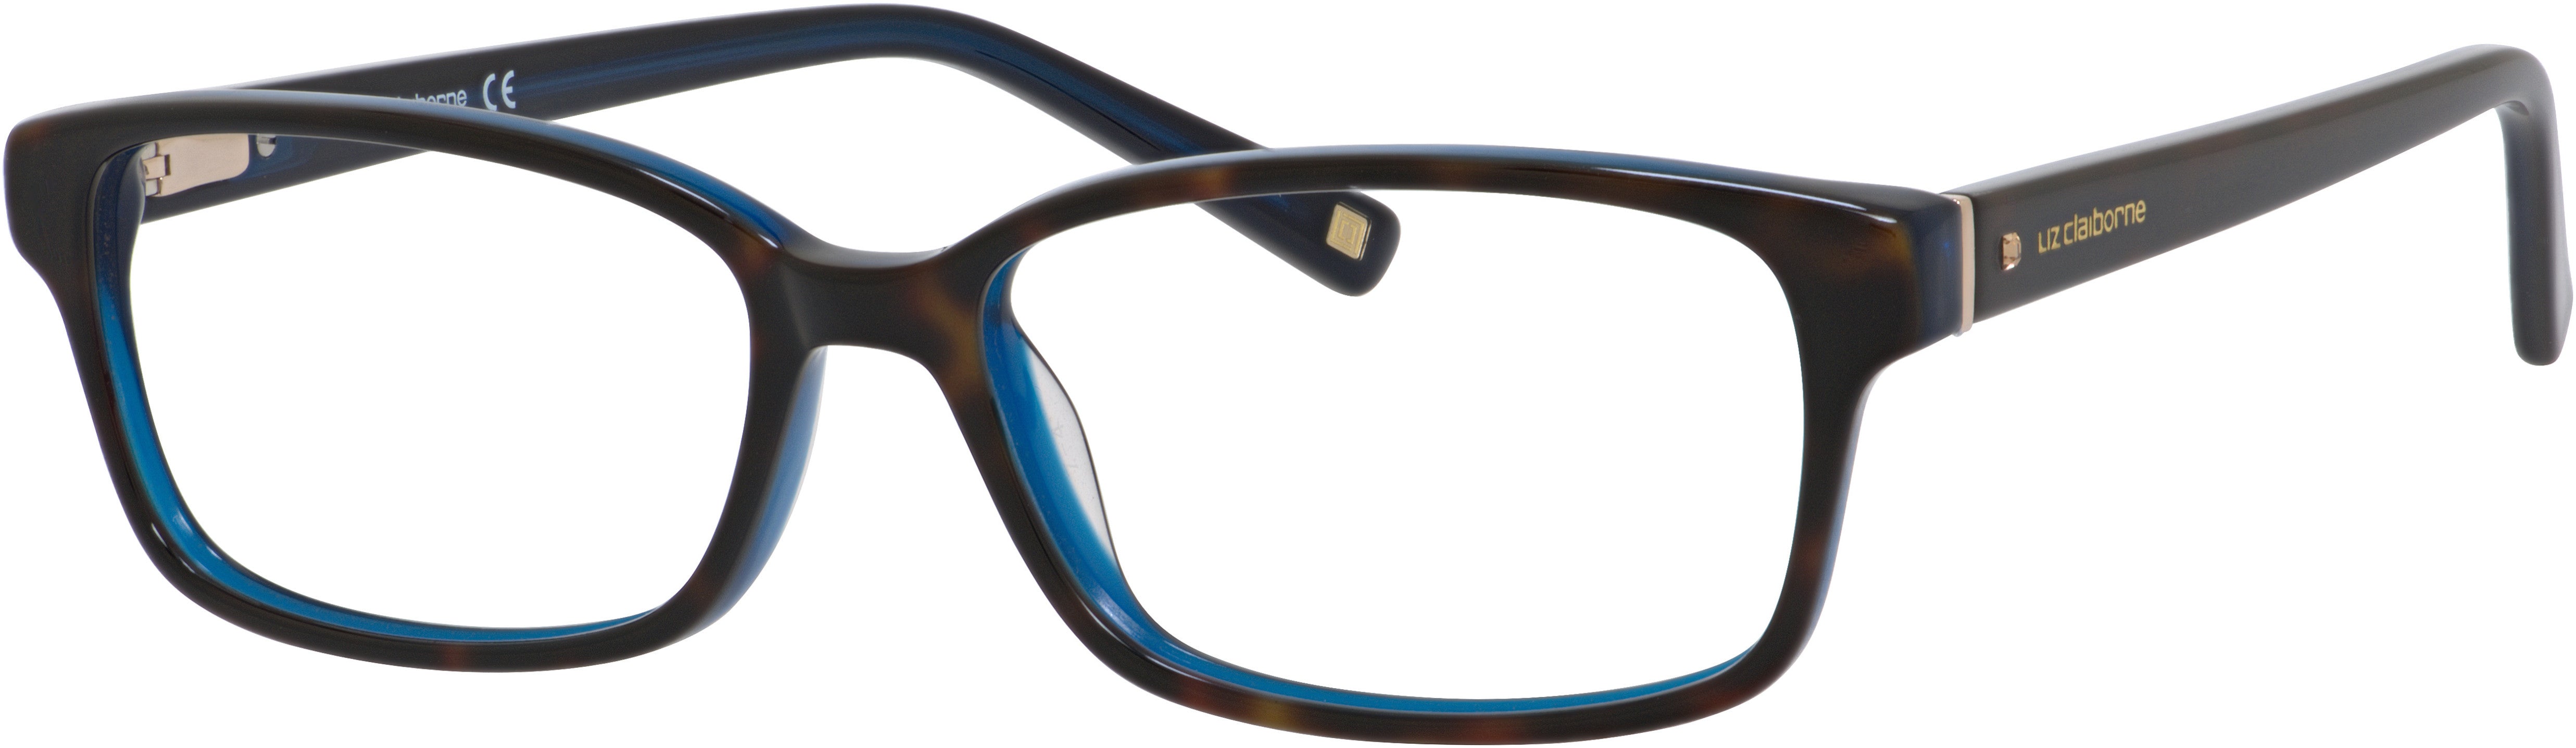  Liz Claiborne 633 Rectangular Eyeglasses 0IPR-0IPR  Havana Blue (00 Demo Lens)